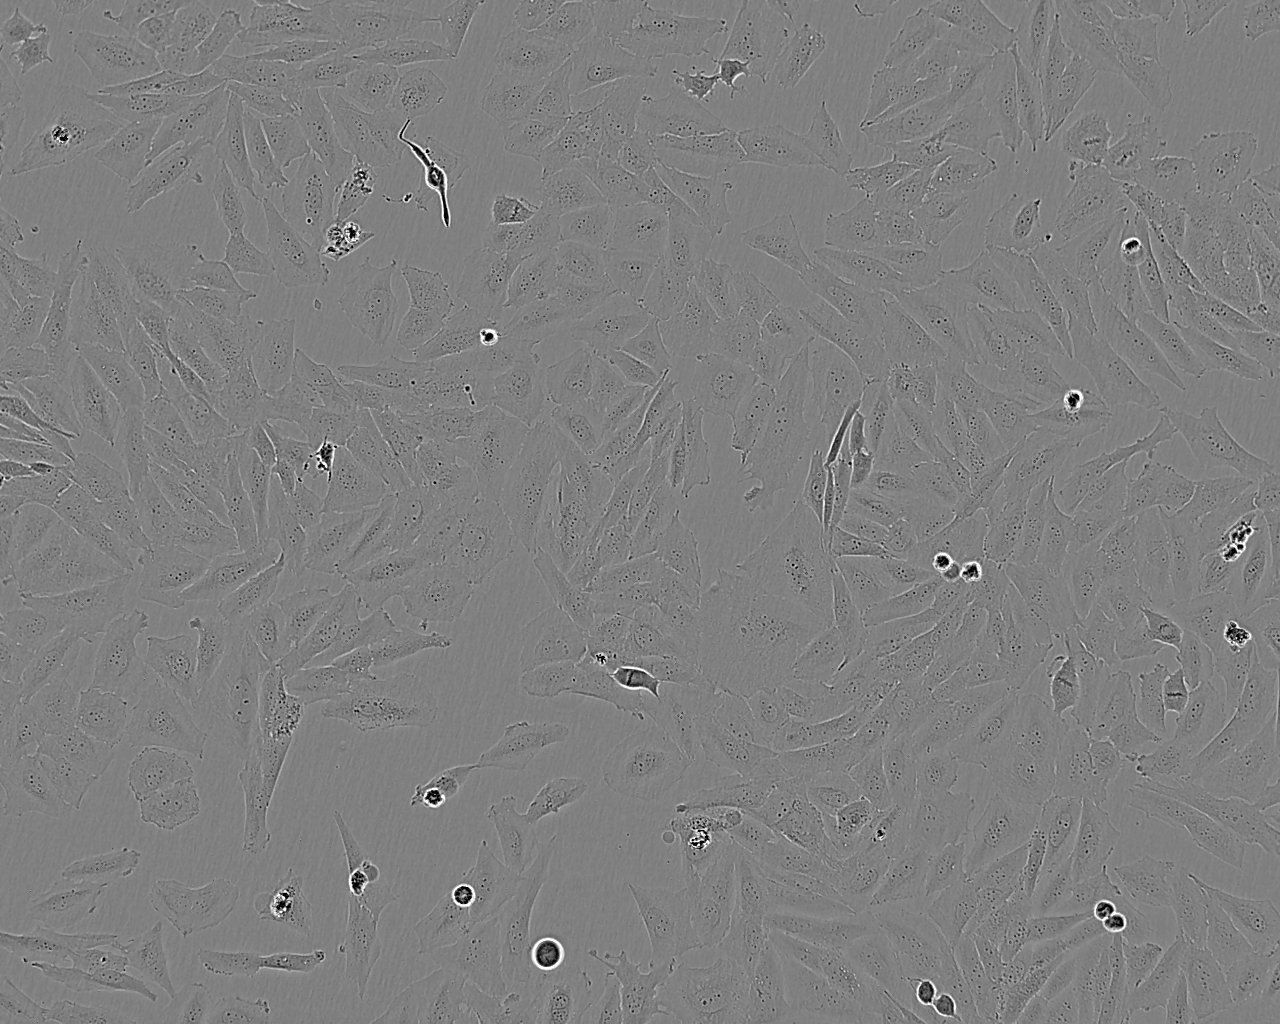 DLM8 Cell:C3H小鼠骨肉瘤细胞系